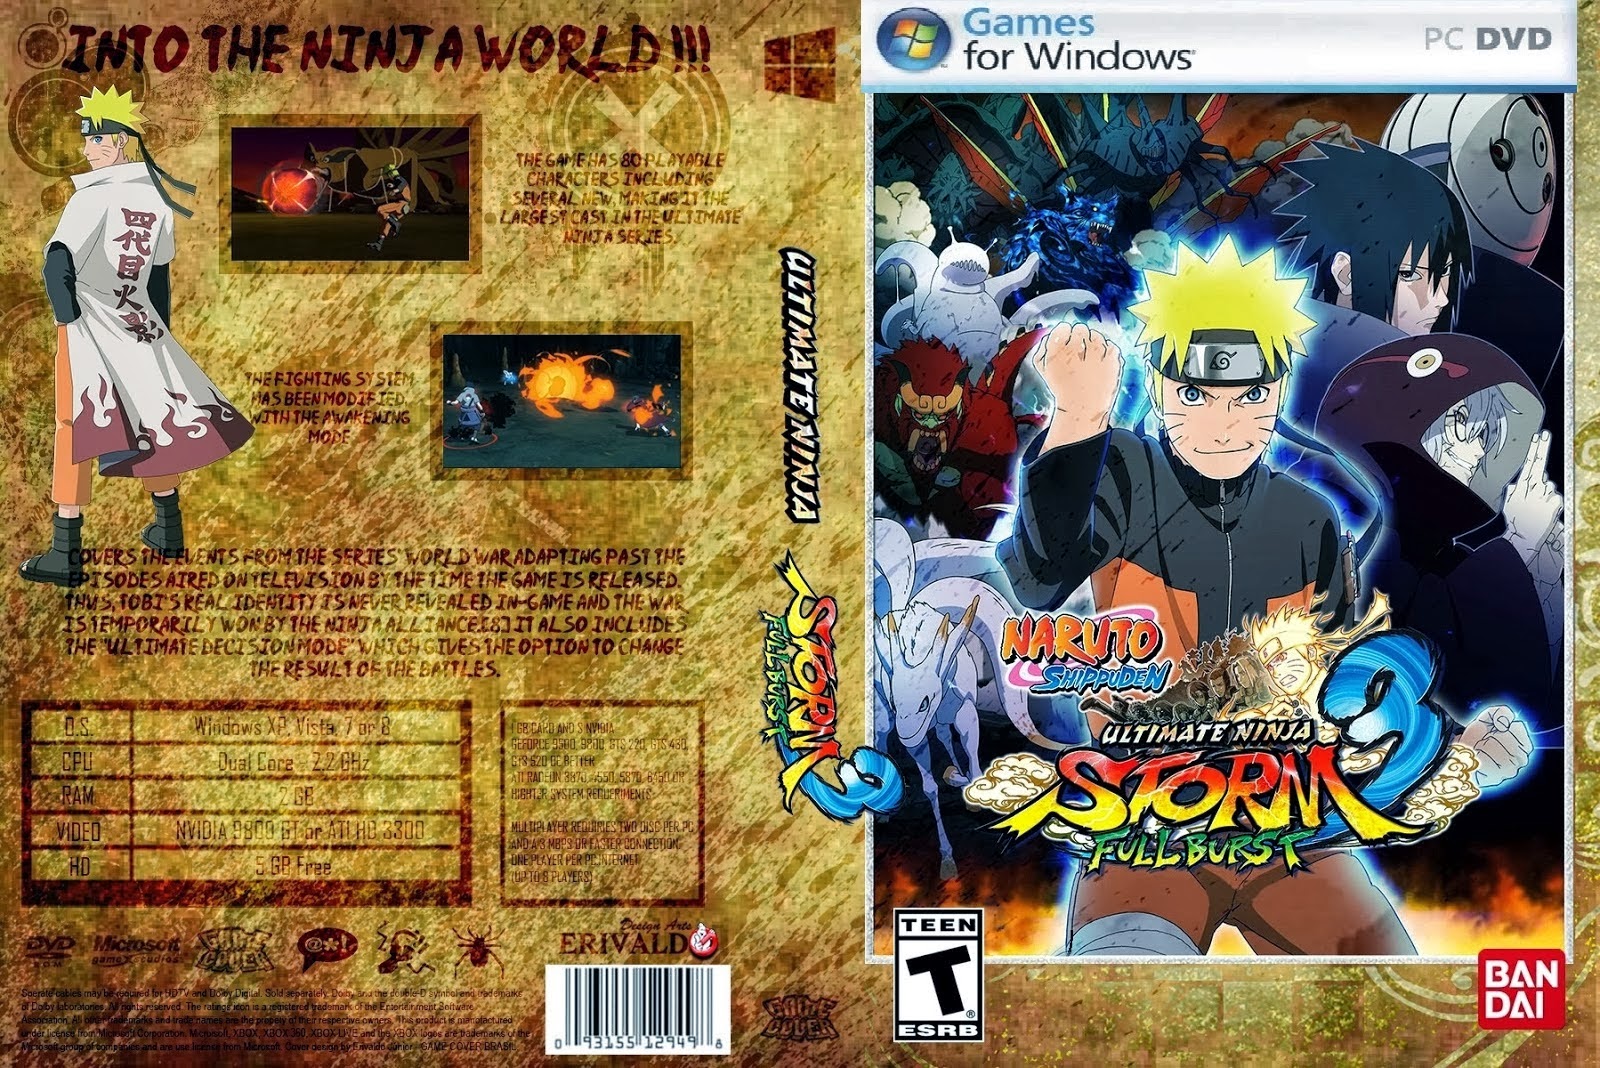 Arquivos Naruto • Portal Viciados